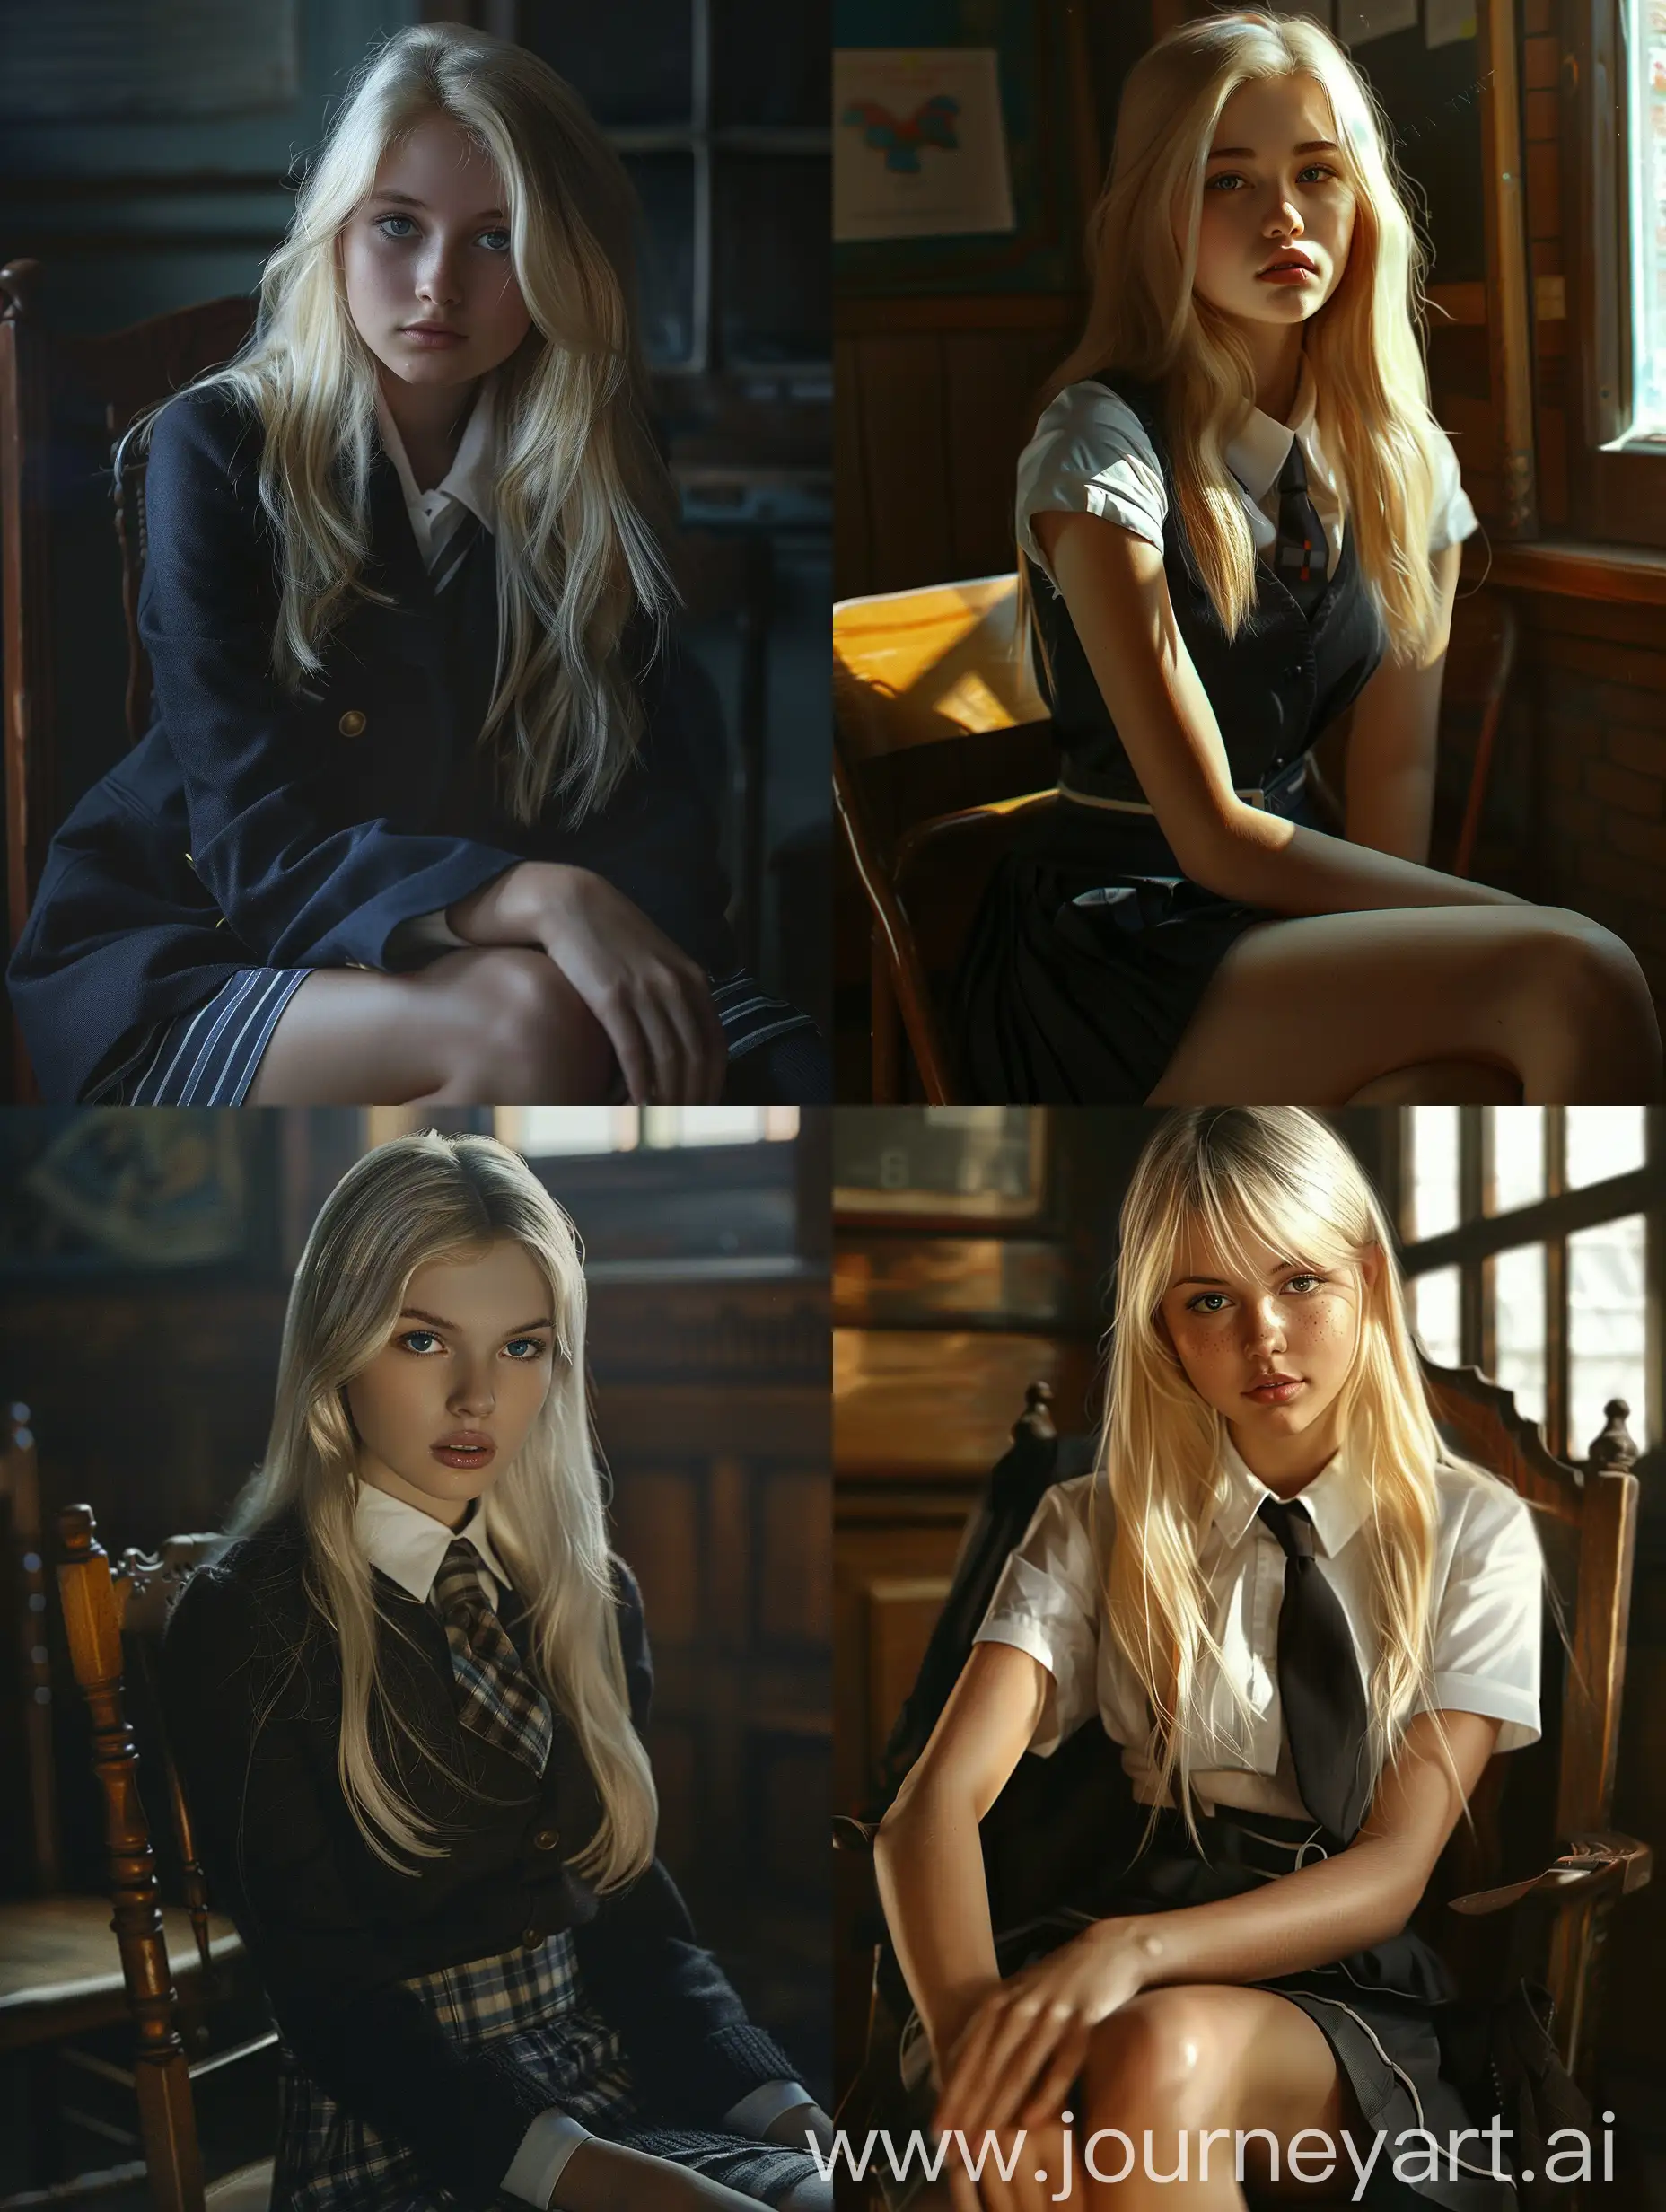 Young-Blonde-Girl-in-School-Uniform-Sitting-with-Volumetric-Lighting